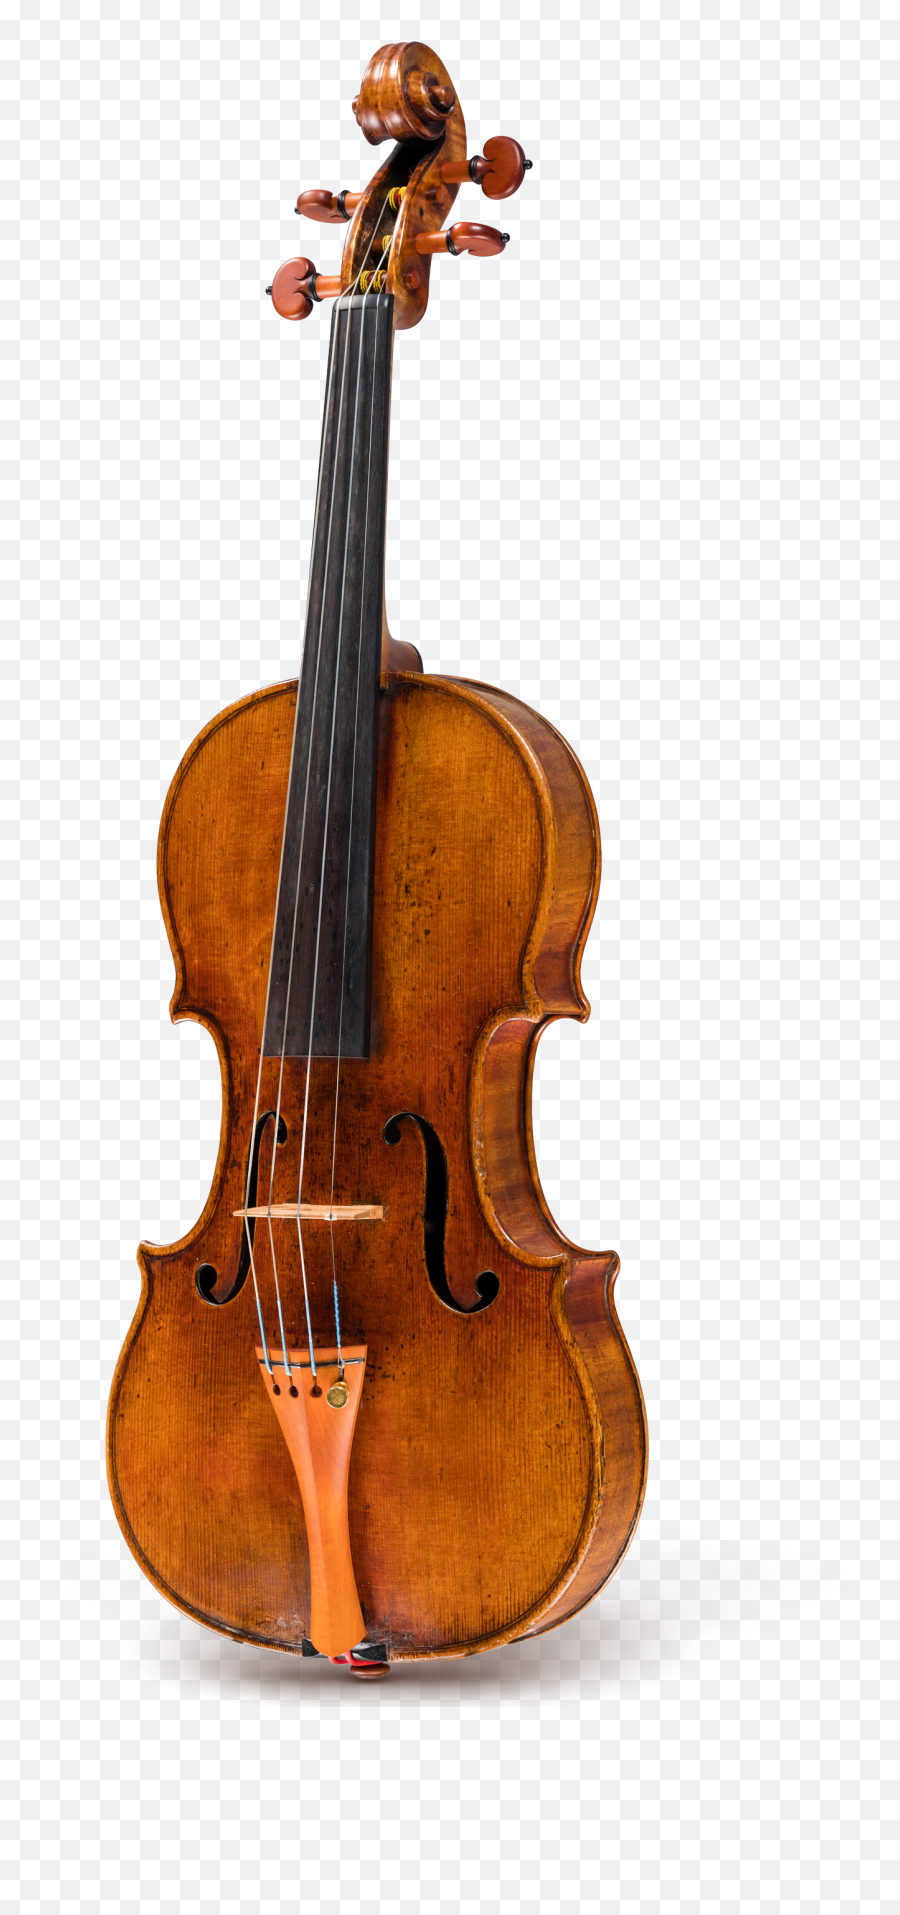 In Consortium - French Violin Emoji,Violin Png